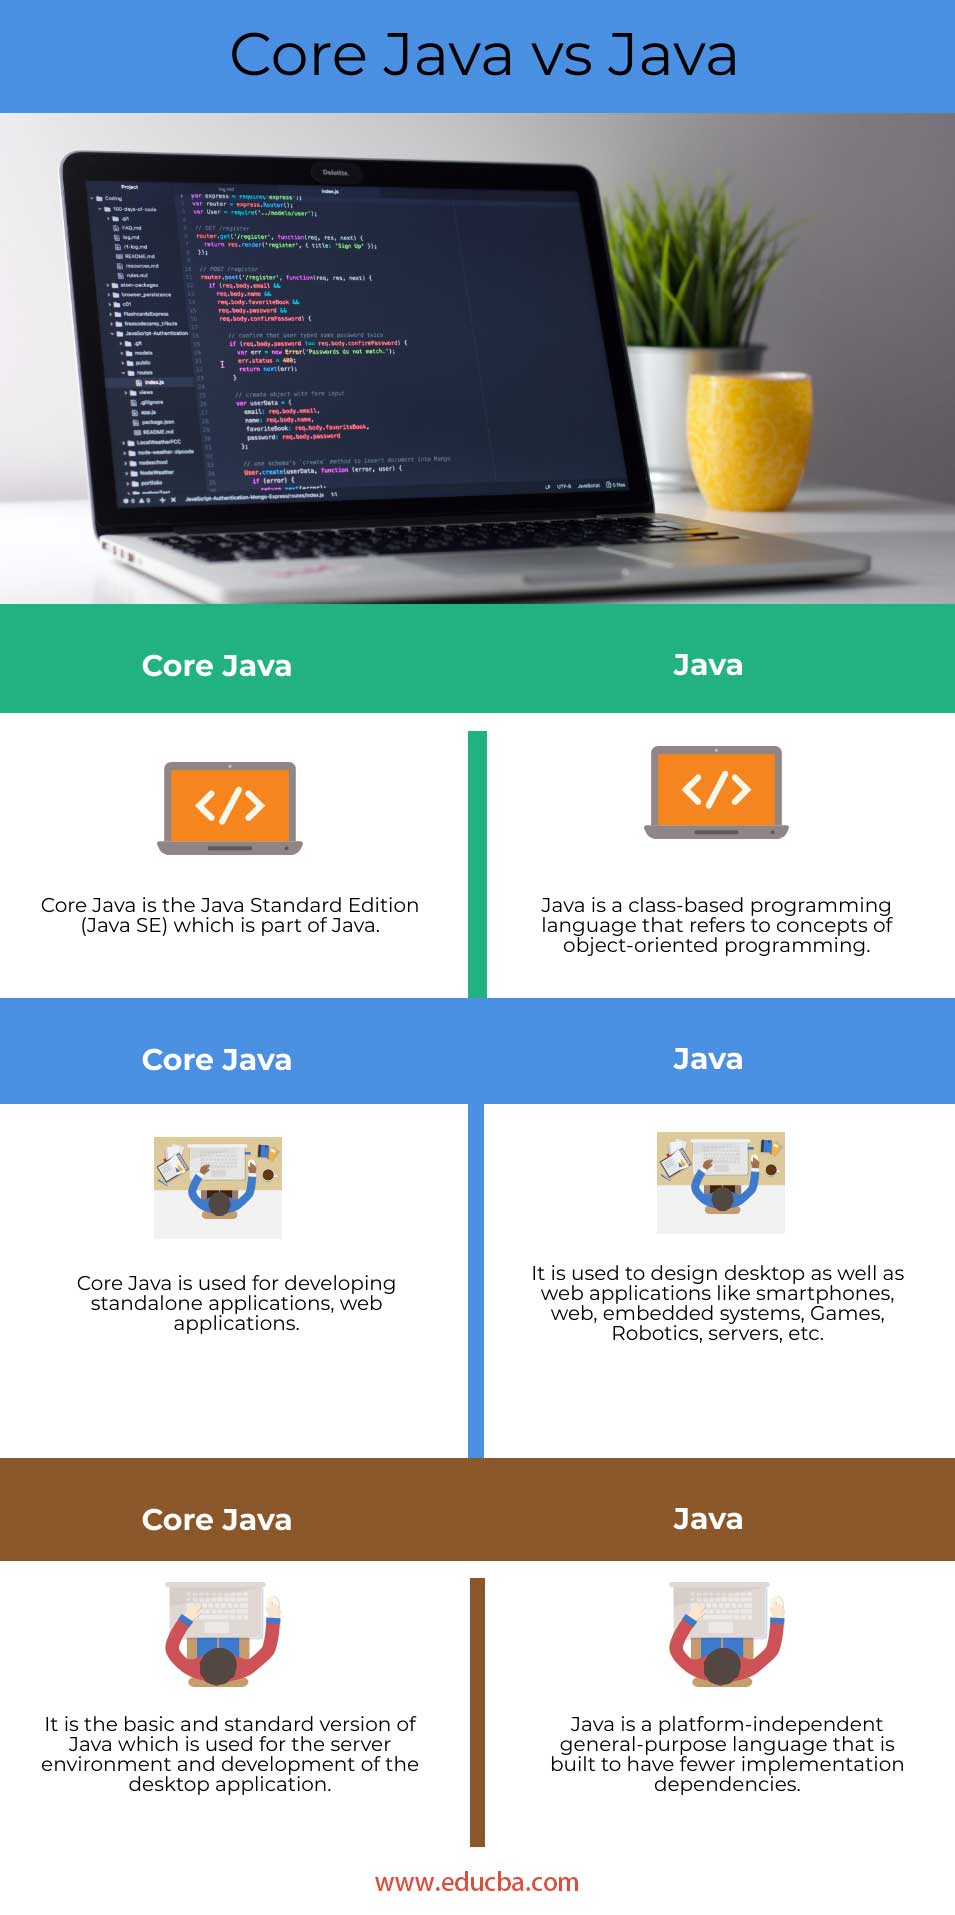 Core-Java-vs-Java-info